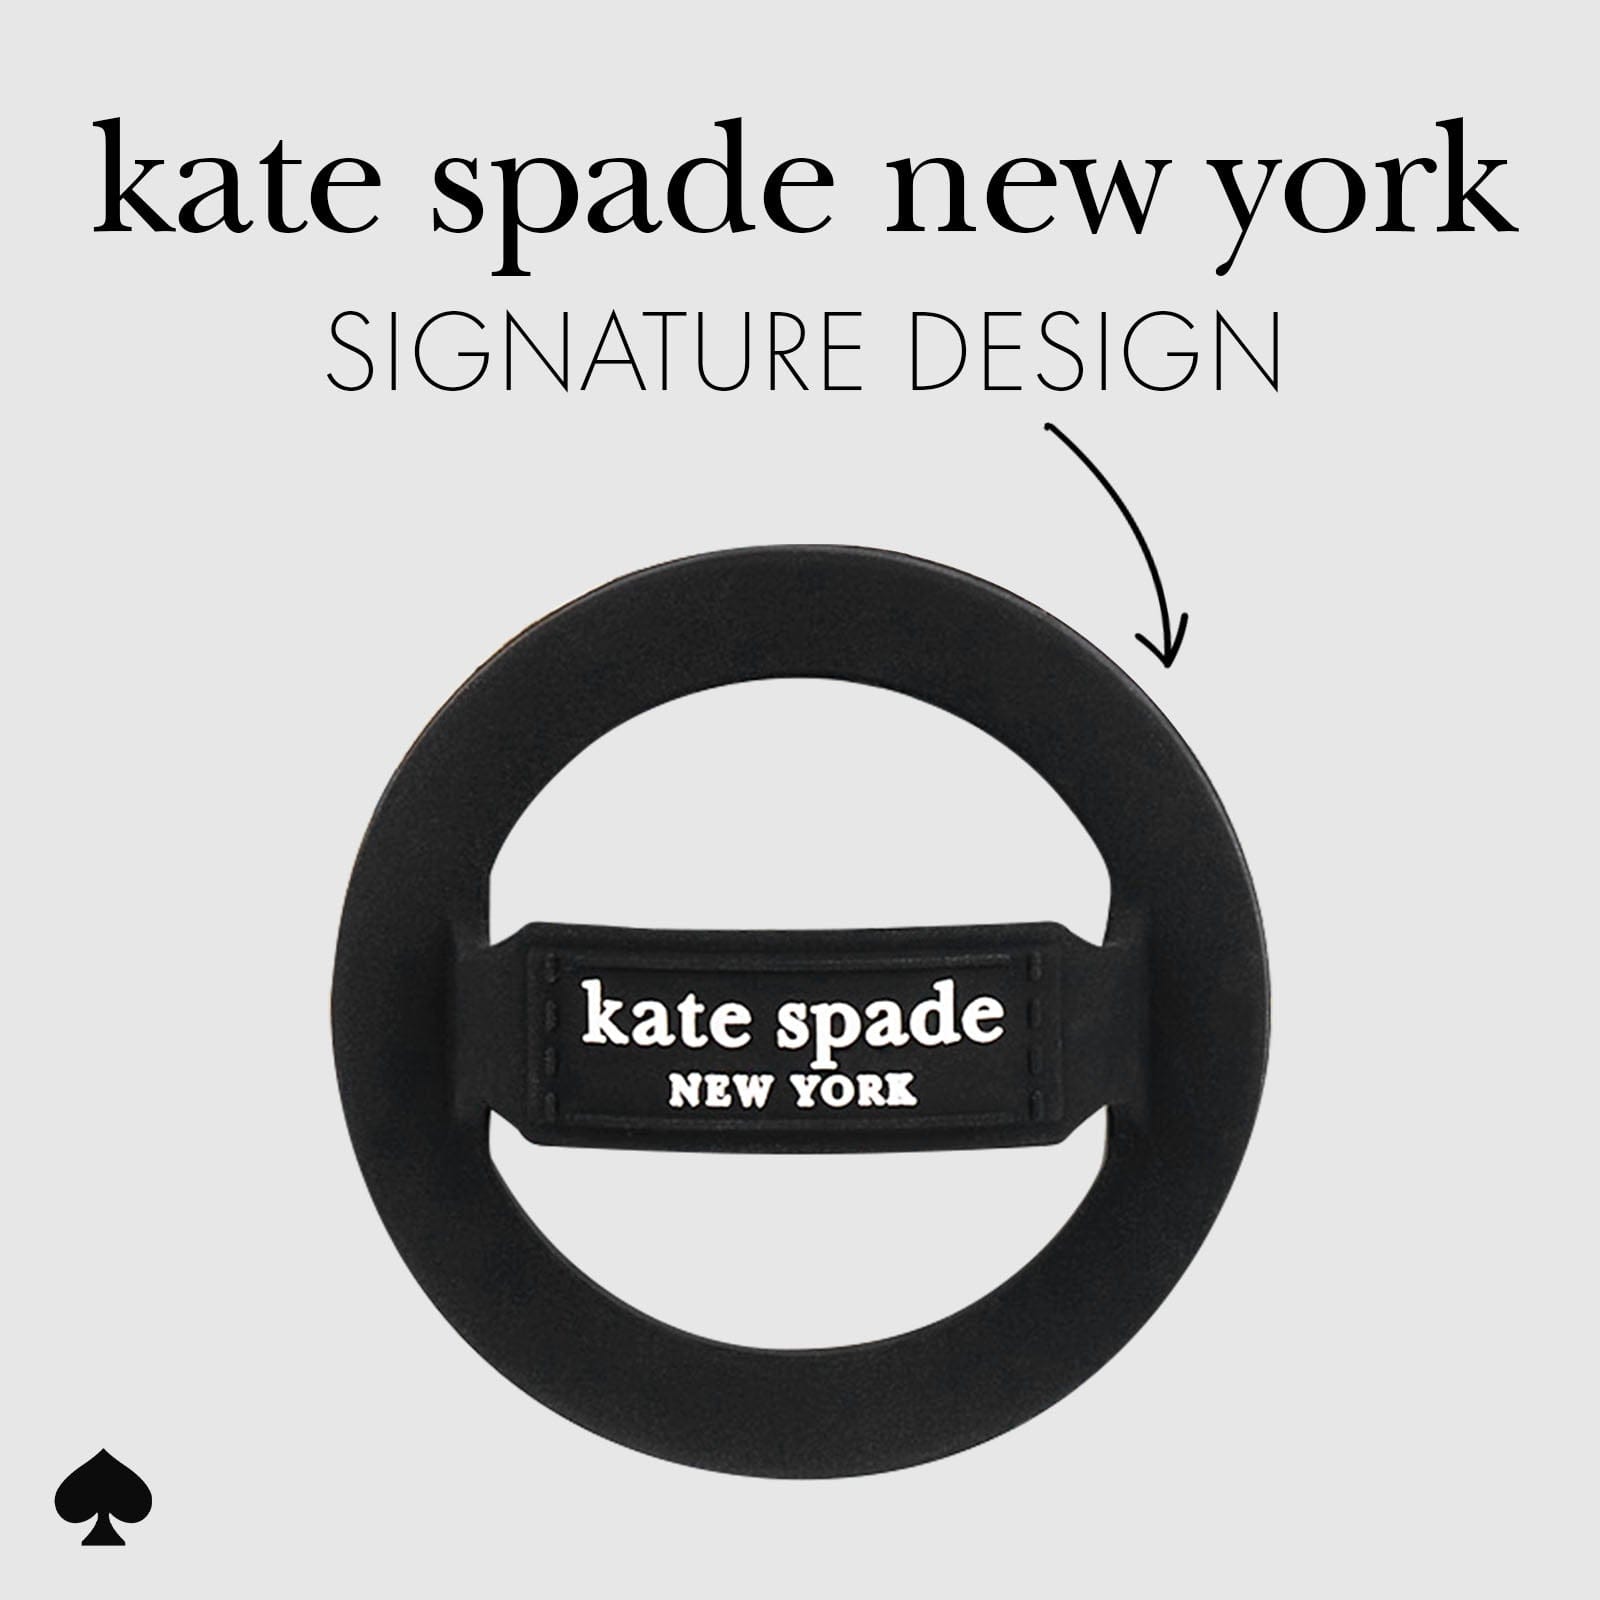 KATE SPADE NEW YORK DESIGN